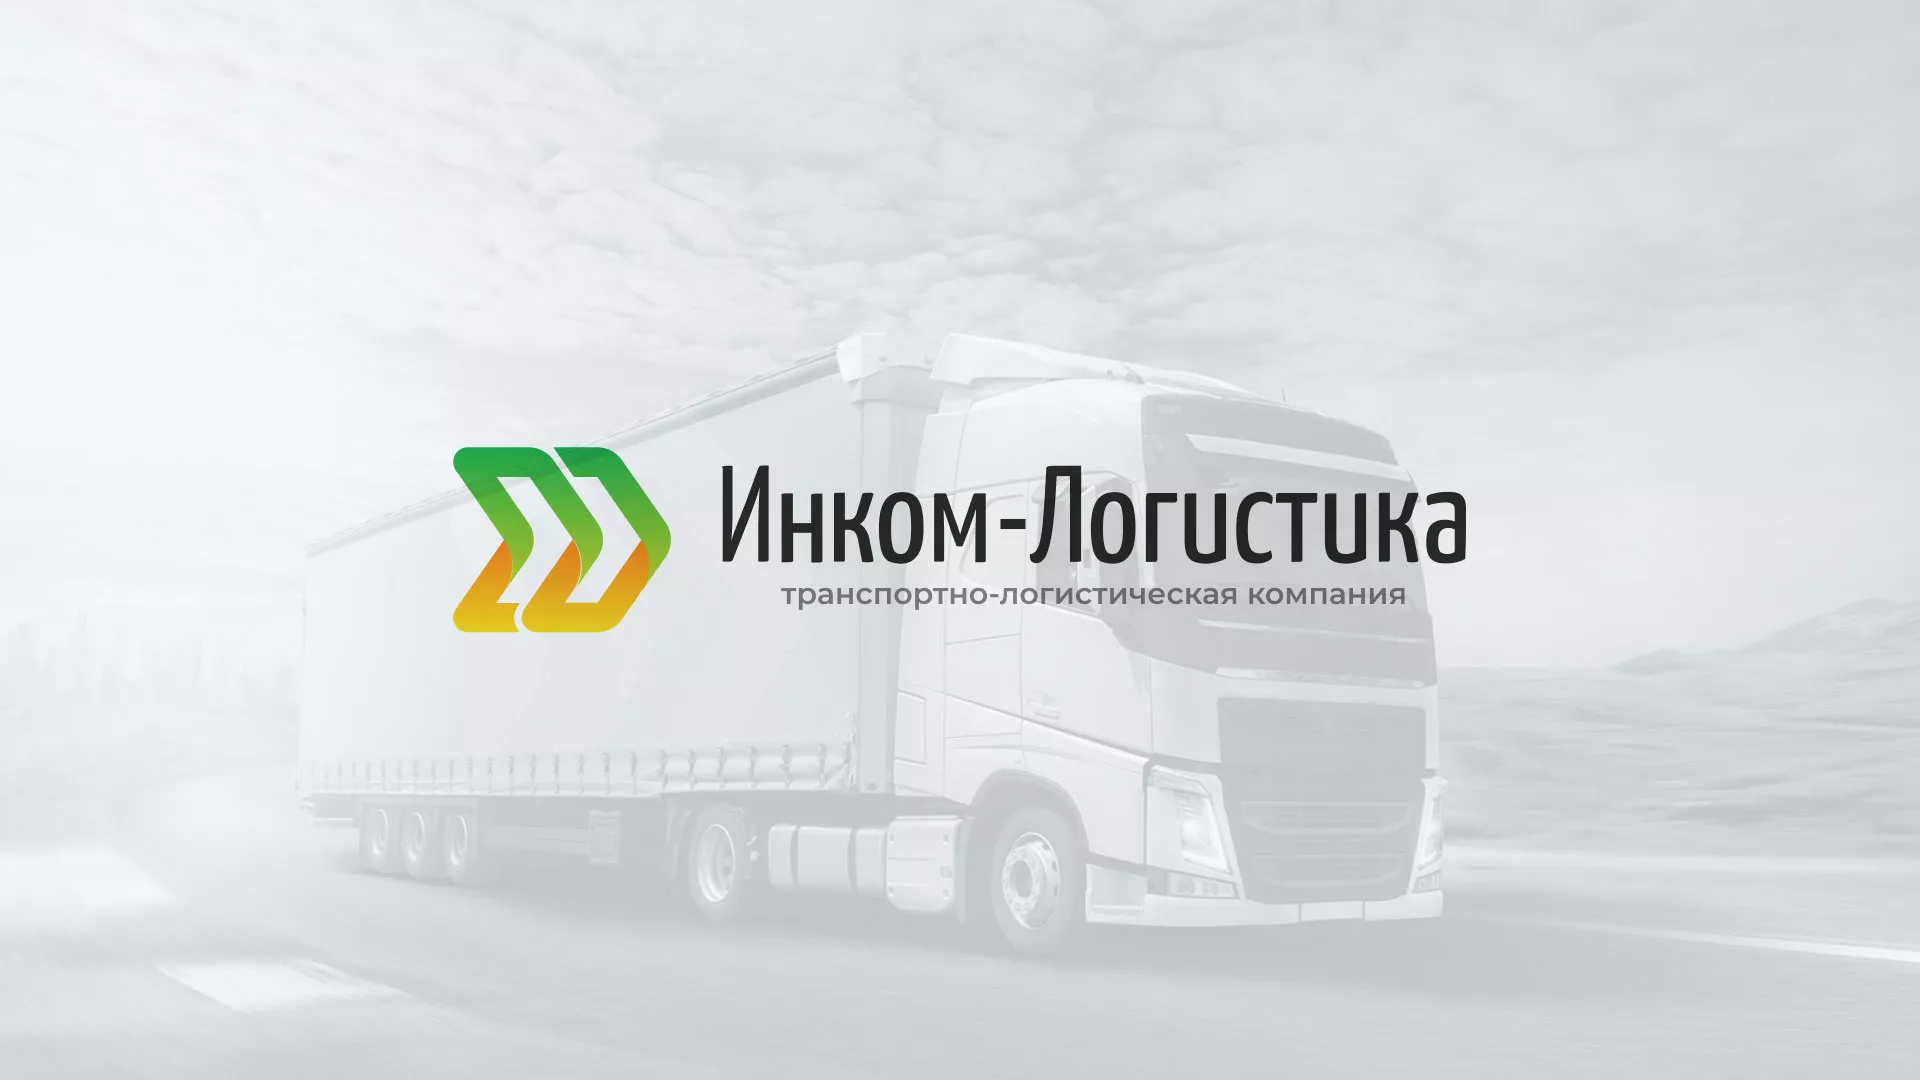 Разработка логотипа и сайта компании «Инком-Логистика» в Уфе